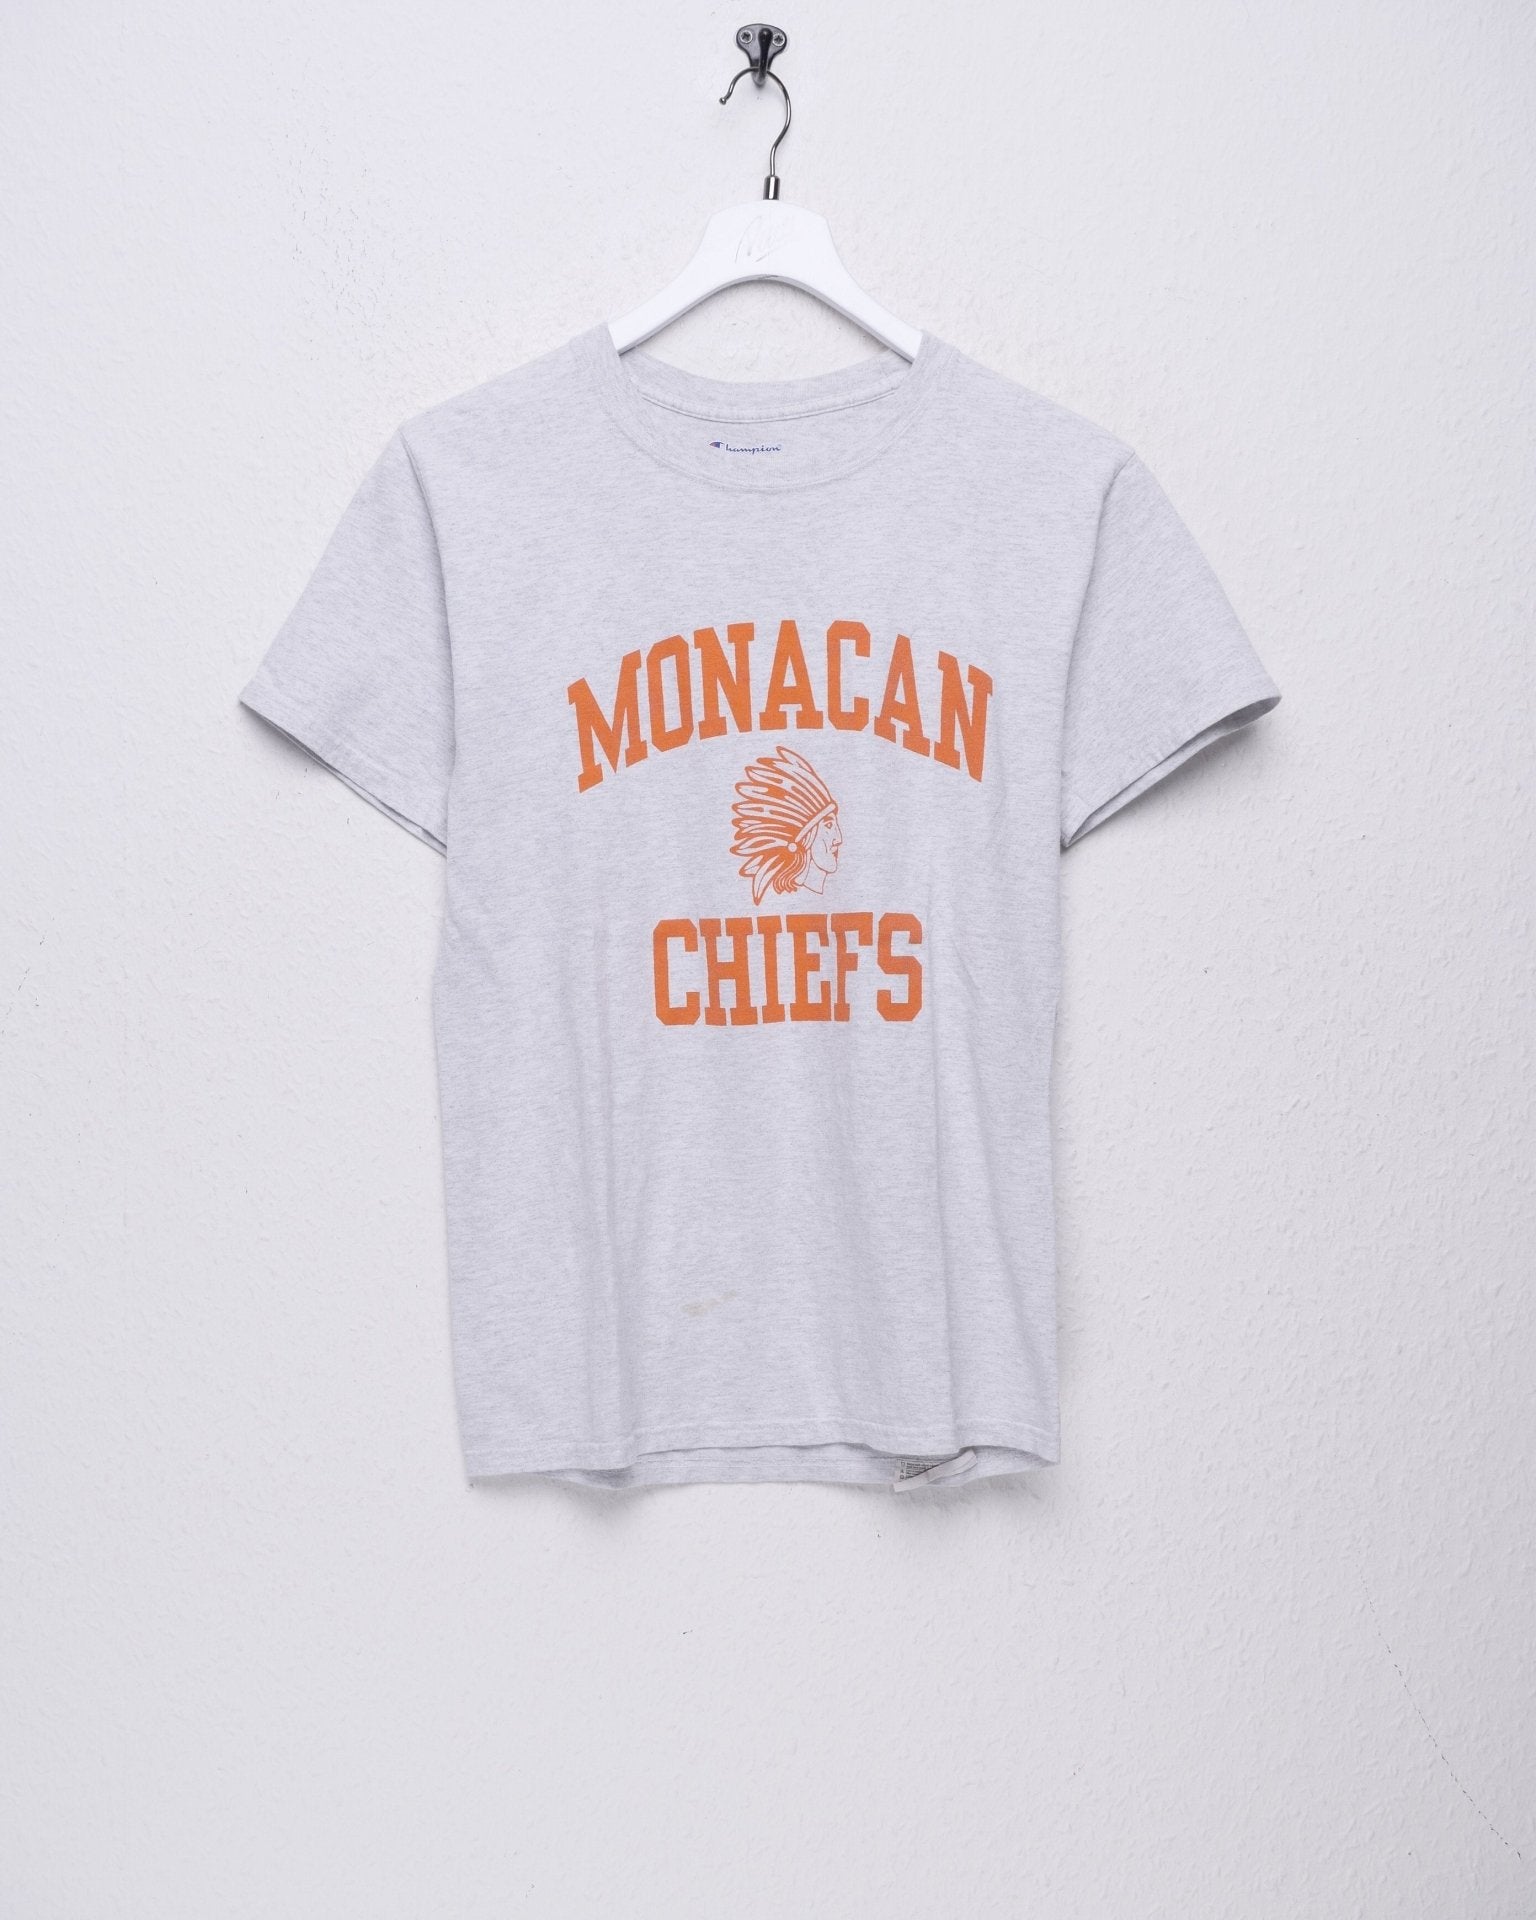 Champion embroidered Logo 'Monacan Chiefs' grey Shirt - Peeces